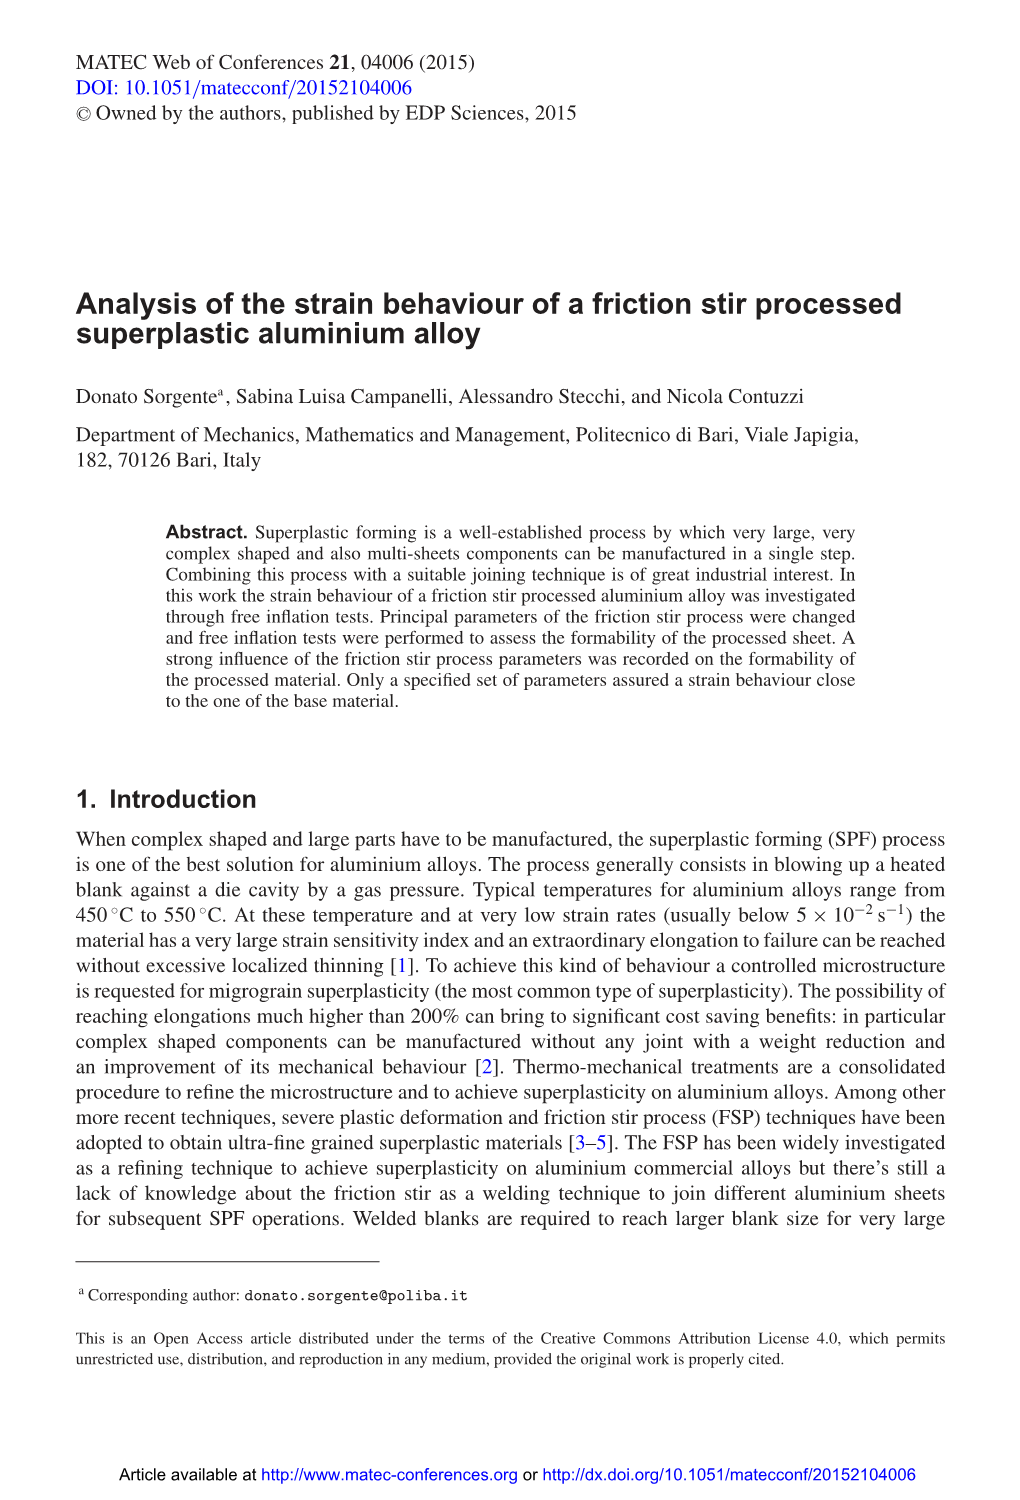 Analysis of the Strain Behaviour of a Friction Stir Processed Superplastic Aluminium Alloy